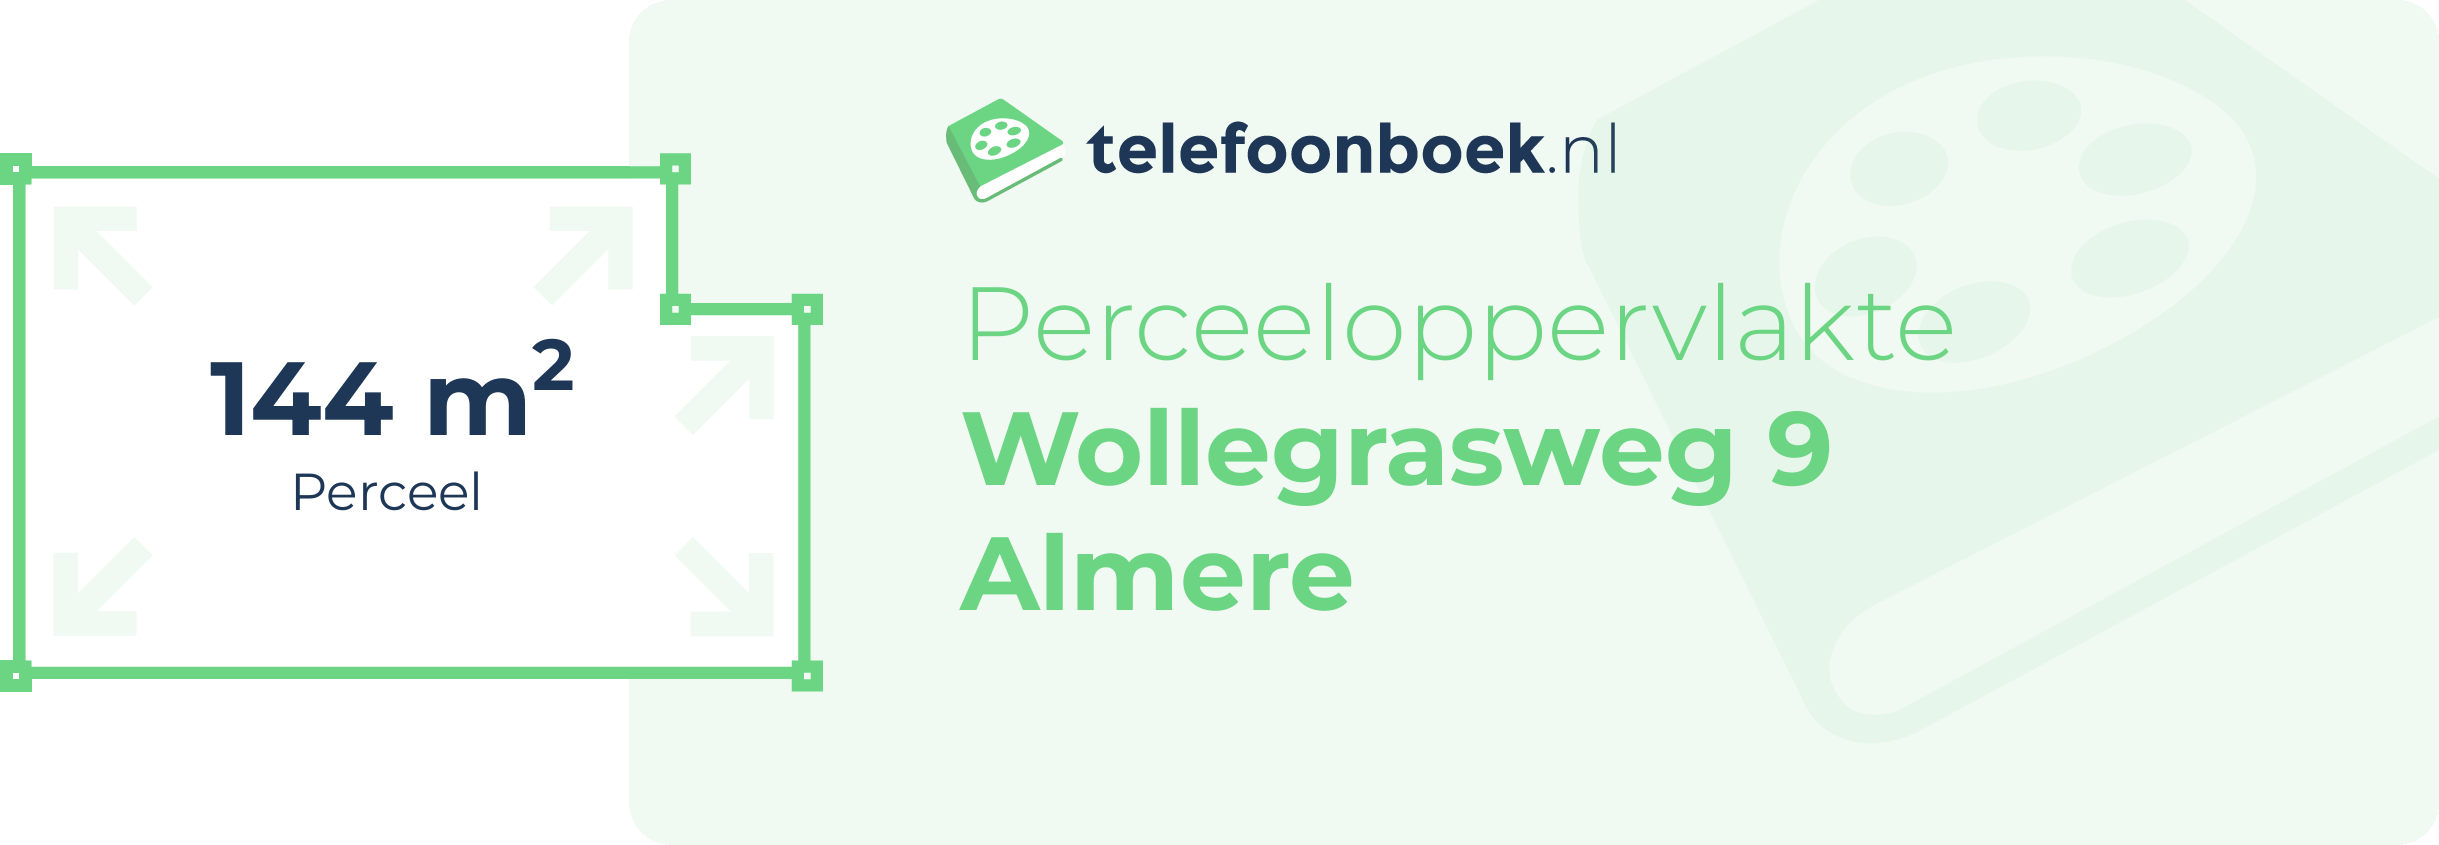 Perceeloppervlakte Wollegrasweg 9 Almere